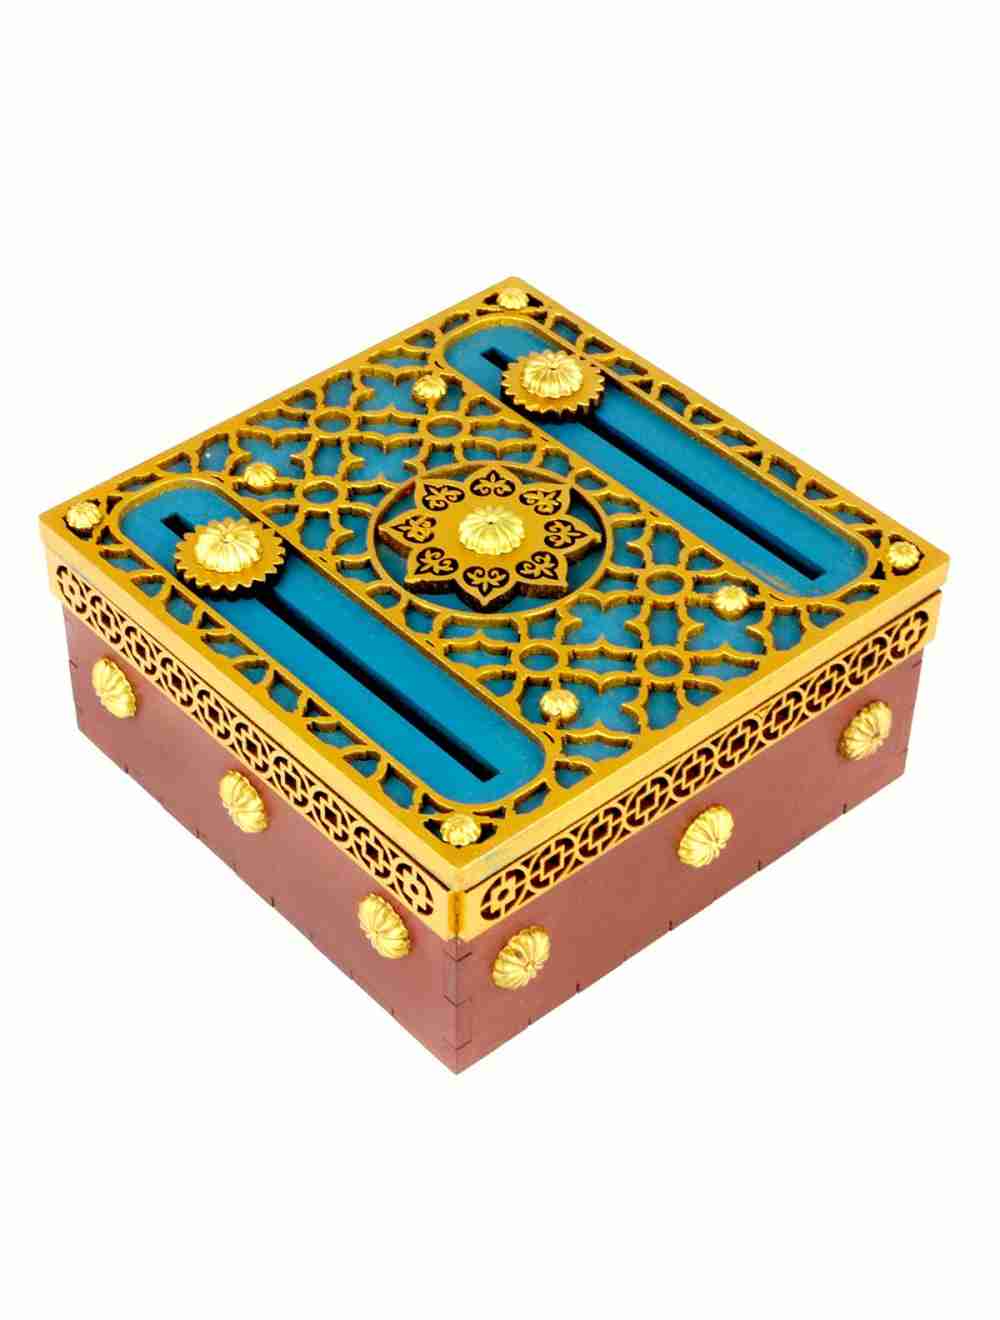 Blue Dragon Trick Box Wooden Puzzle